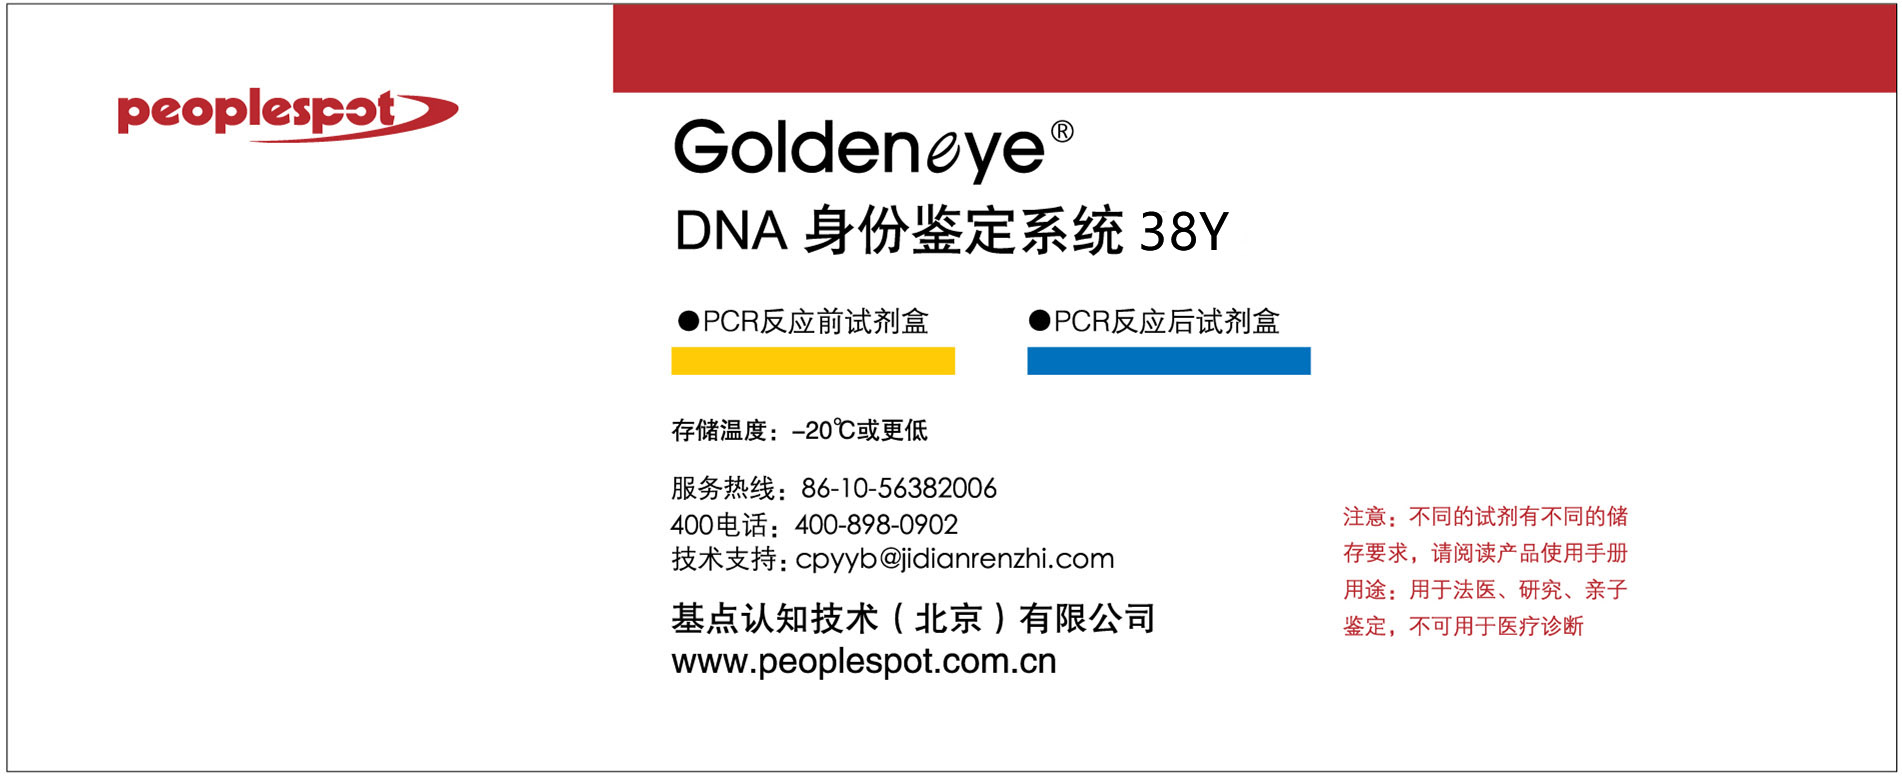 Goldeneye®DNA身份鉴定系统38Y